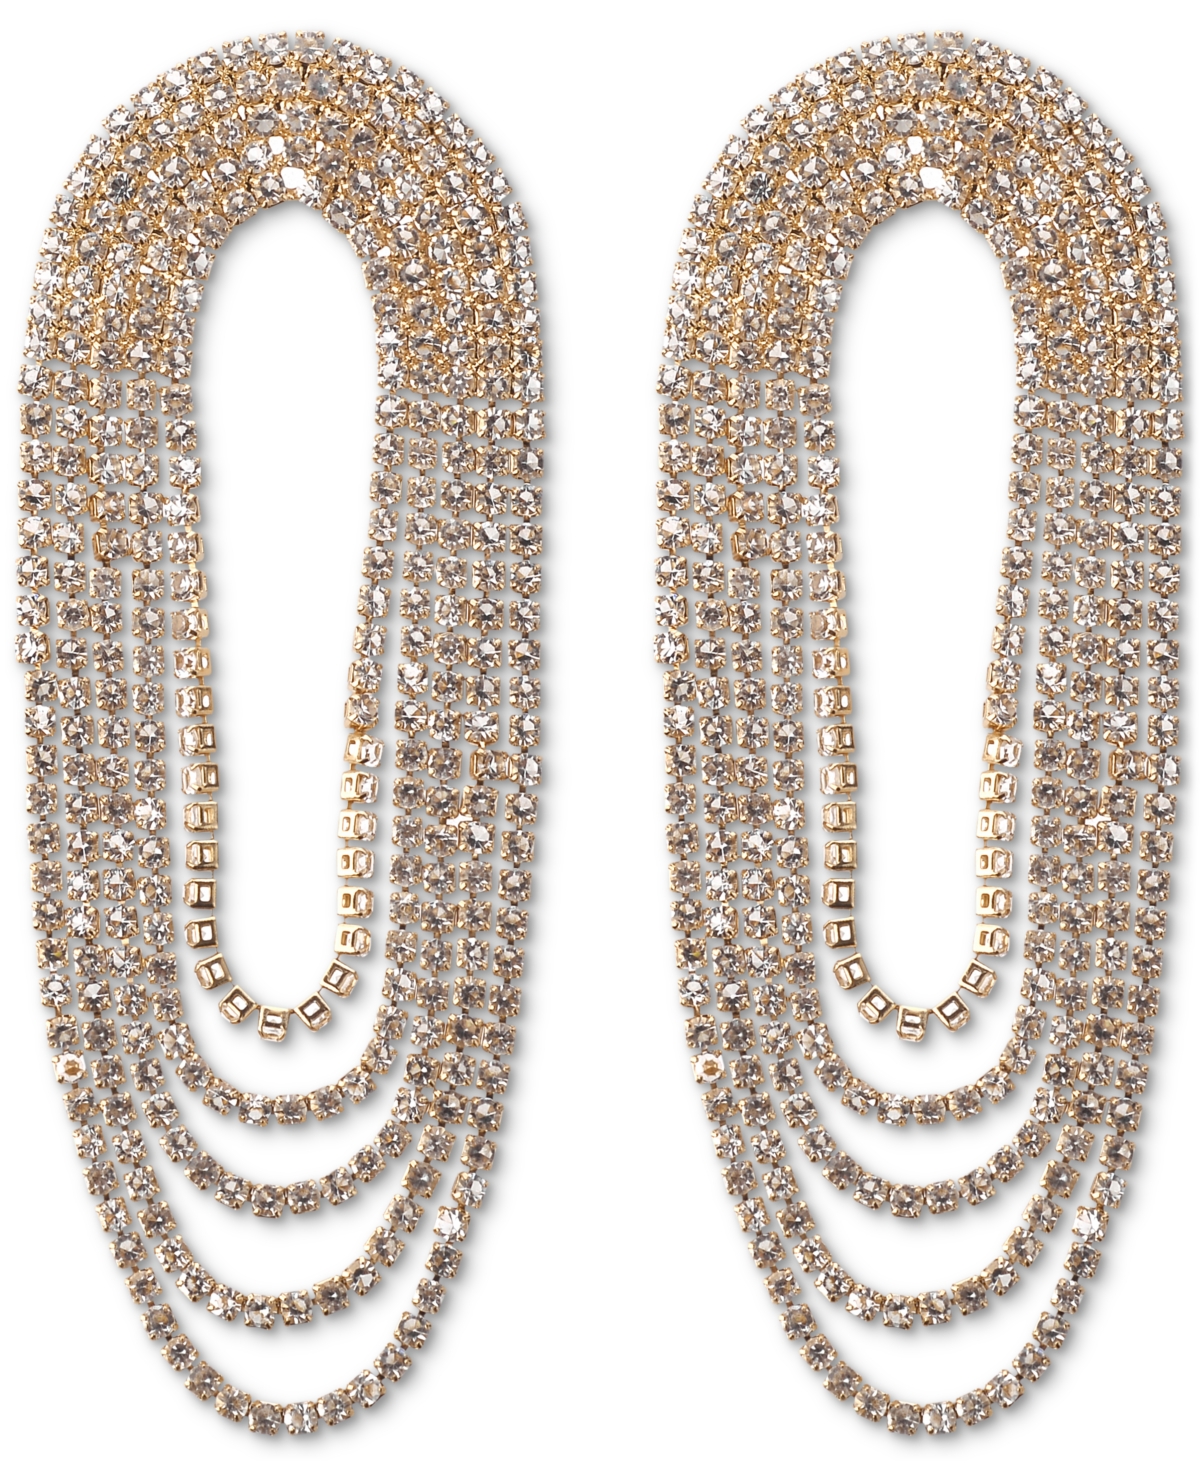 Gold-Tone Rhinestone Chain Loop Statement Earrings, Created for Macy's - Gold